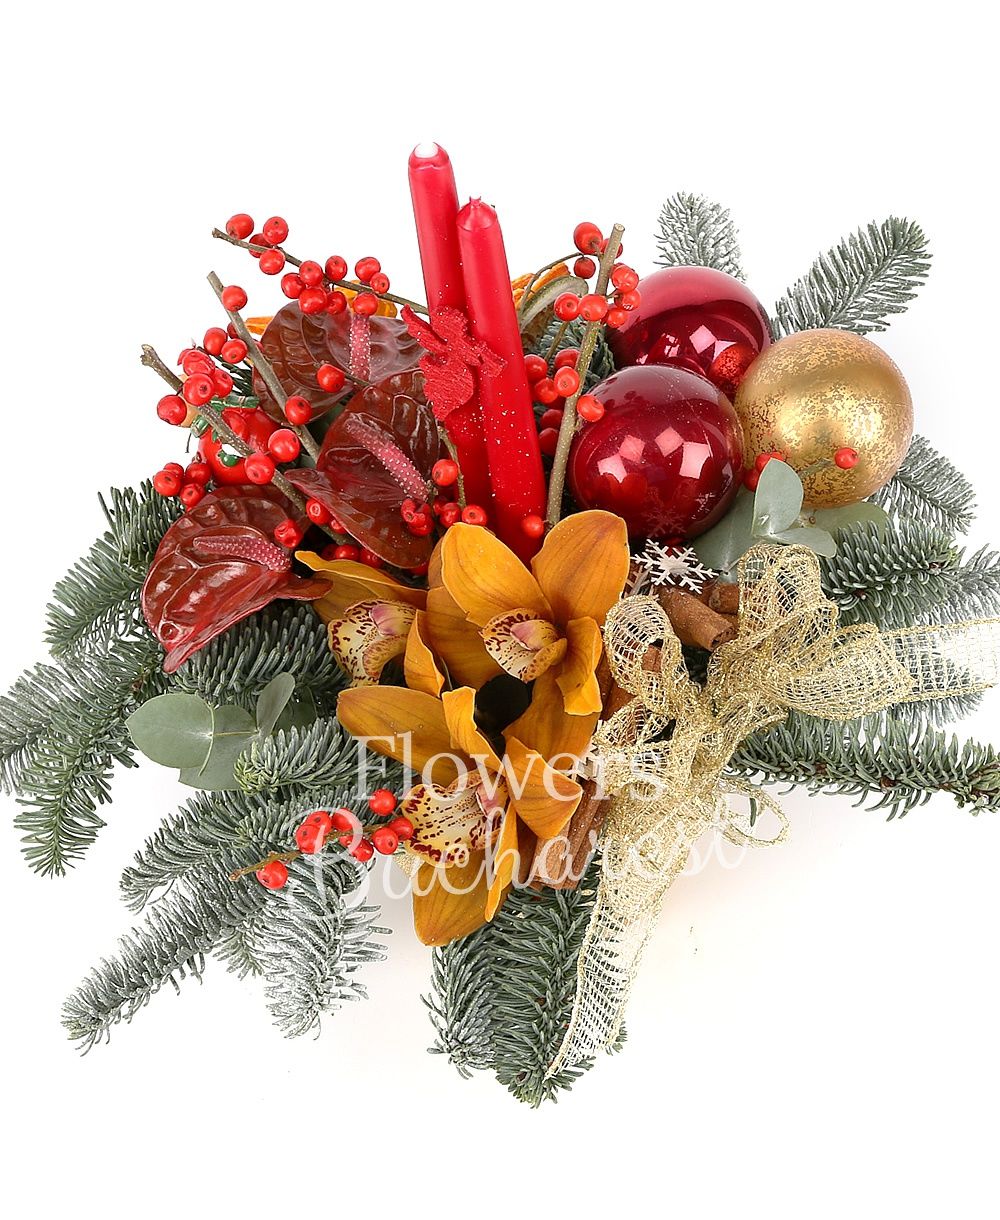 3 red anthurium, ilex, 1 yellow cymbidium, globes, dried fruits, candle, fir